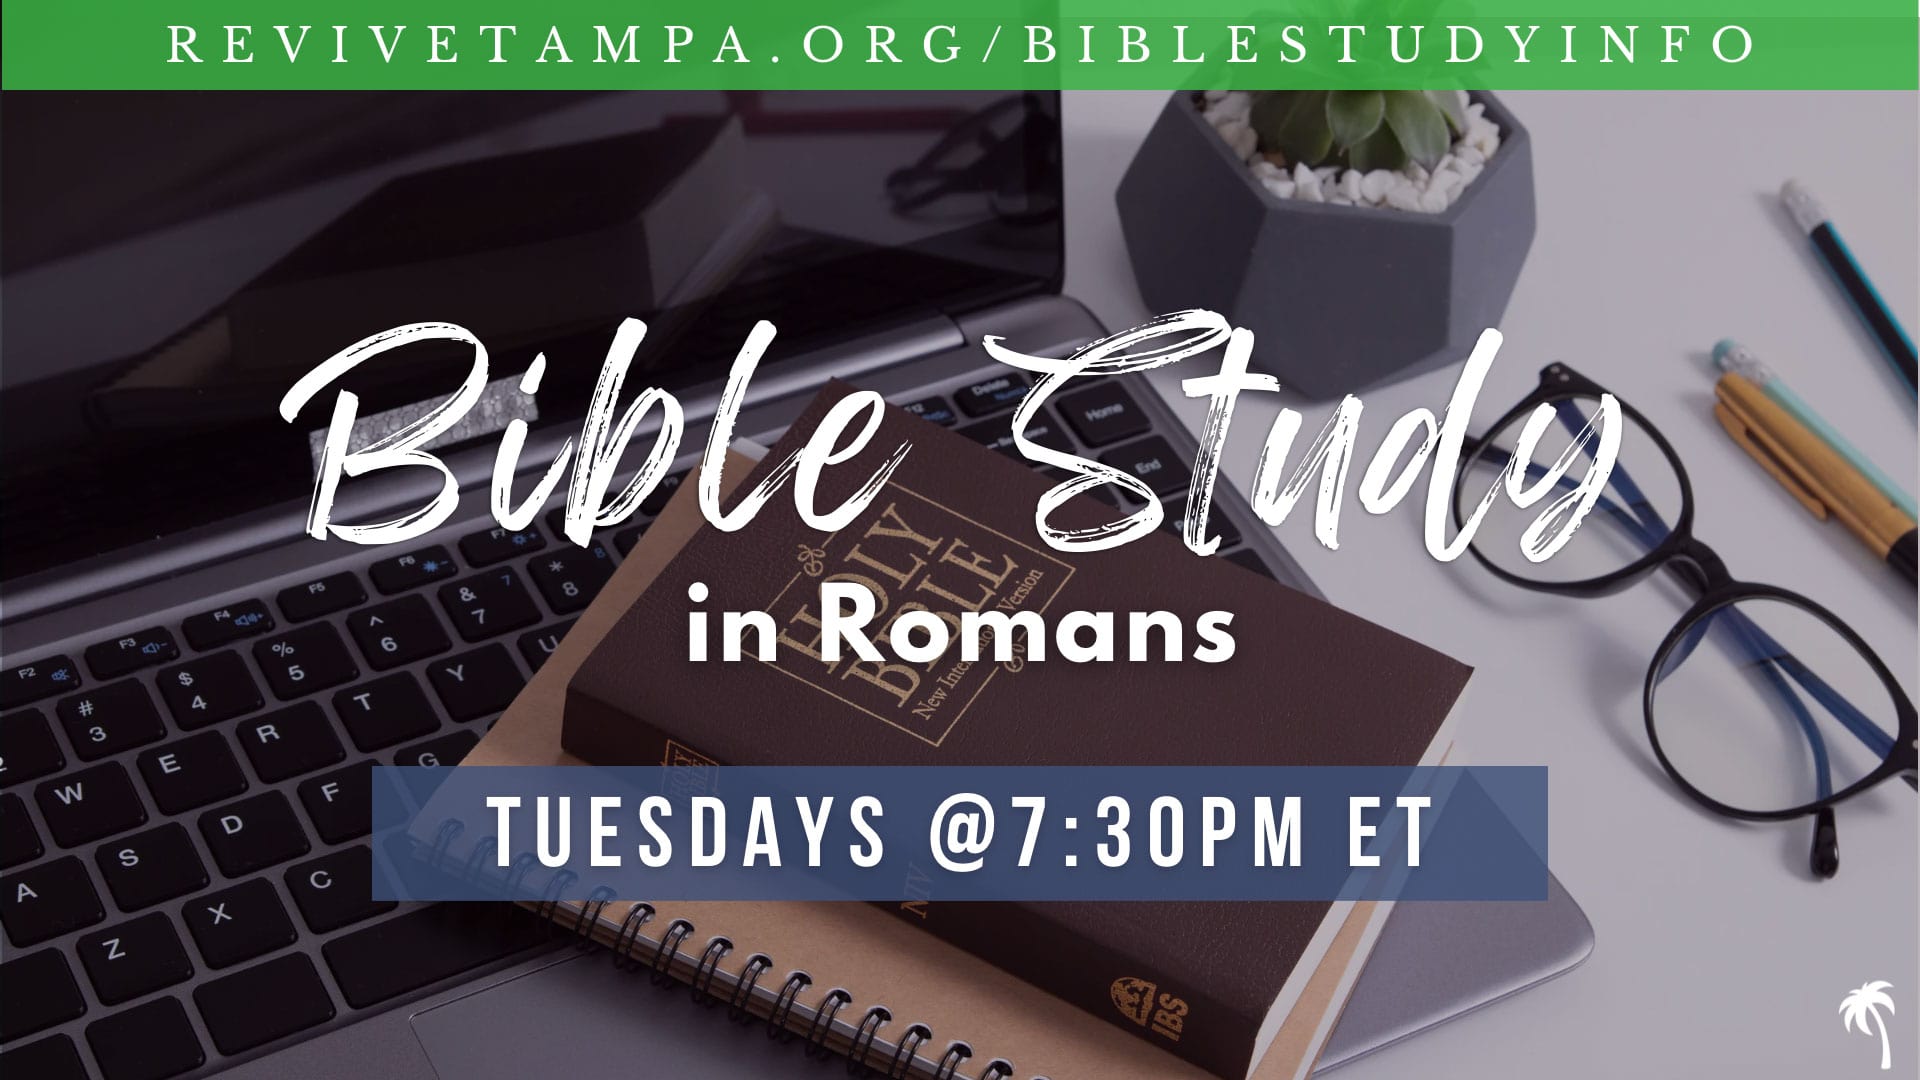 Romans Bible Study